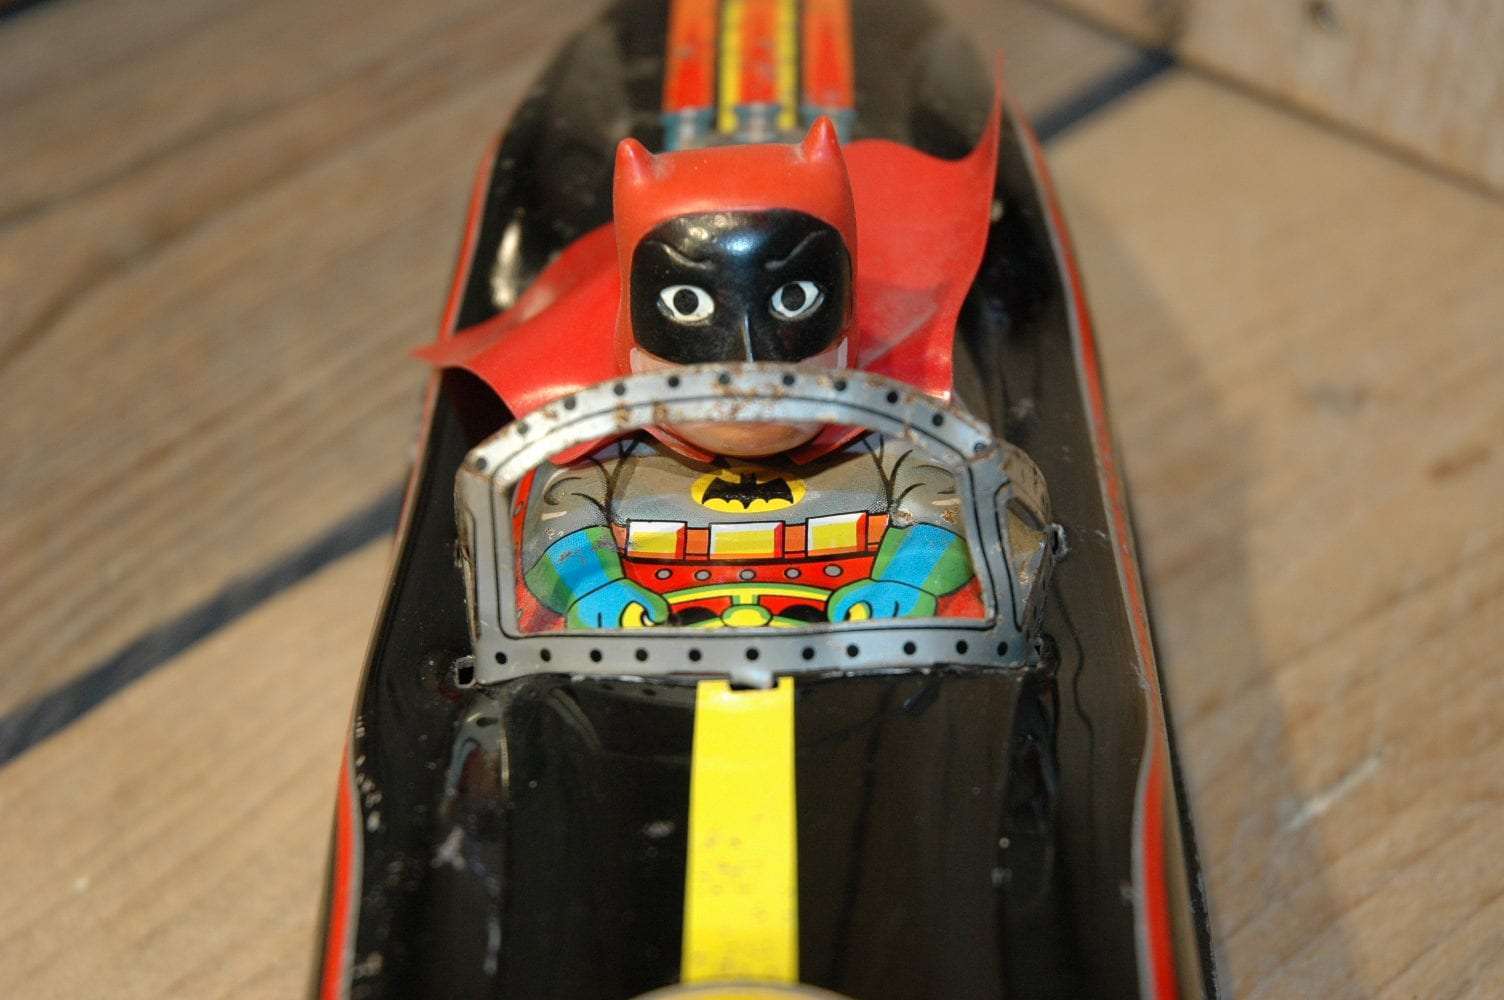 Modern Toys - Batman Batmobile